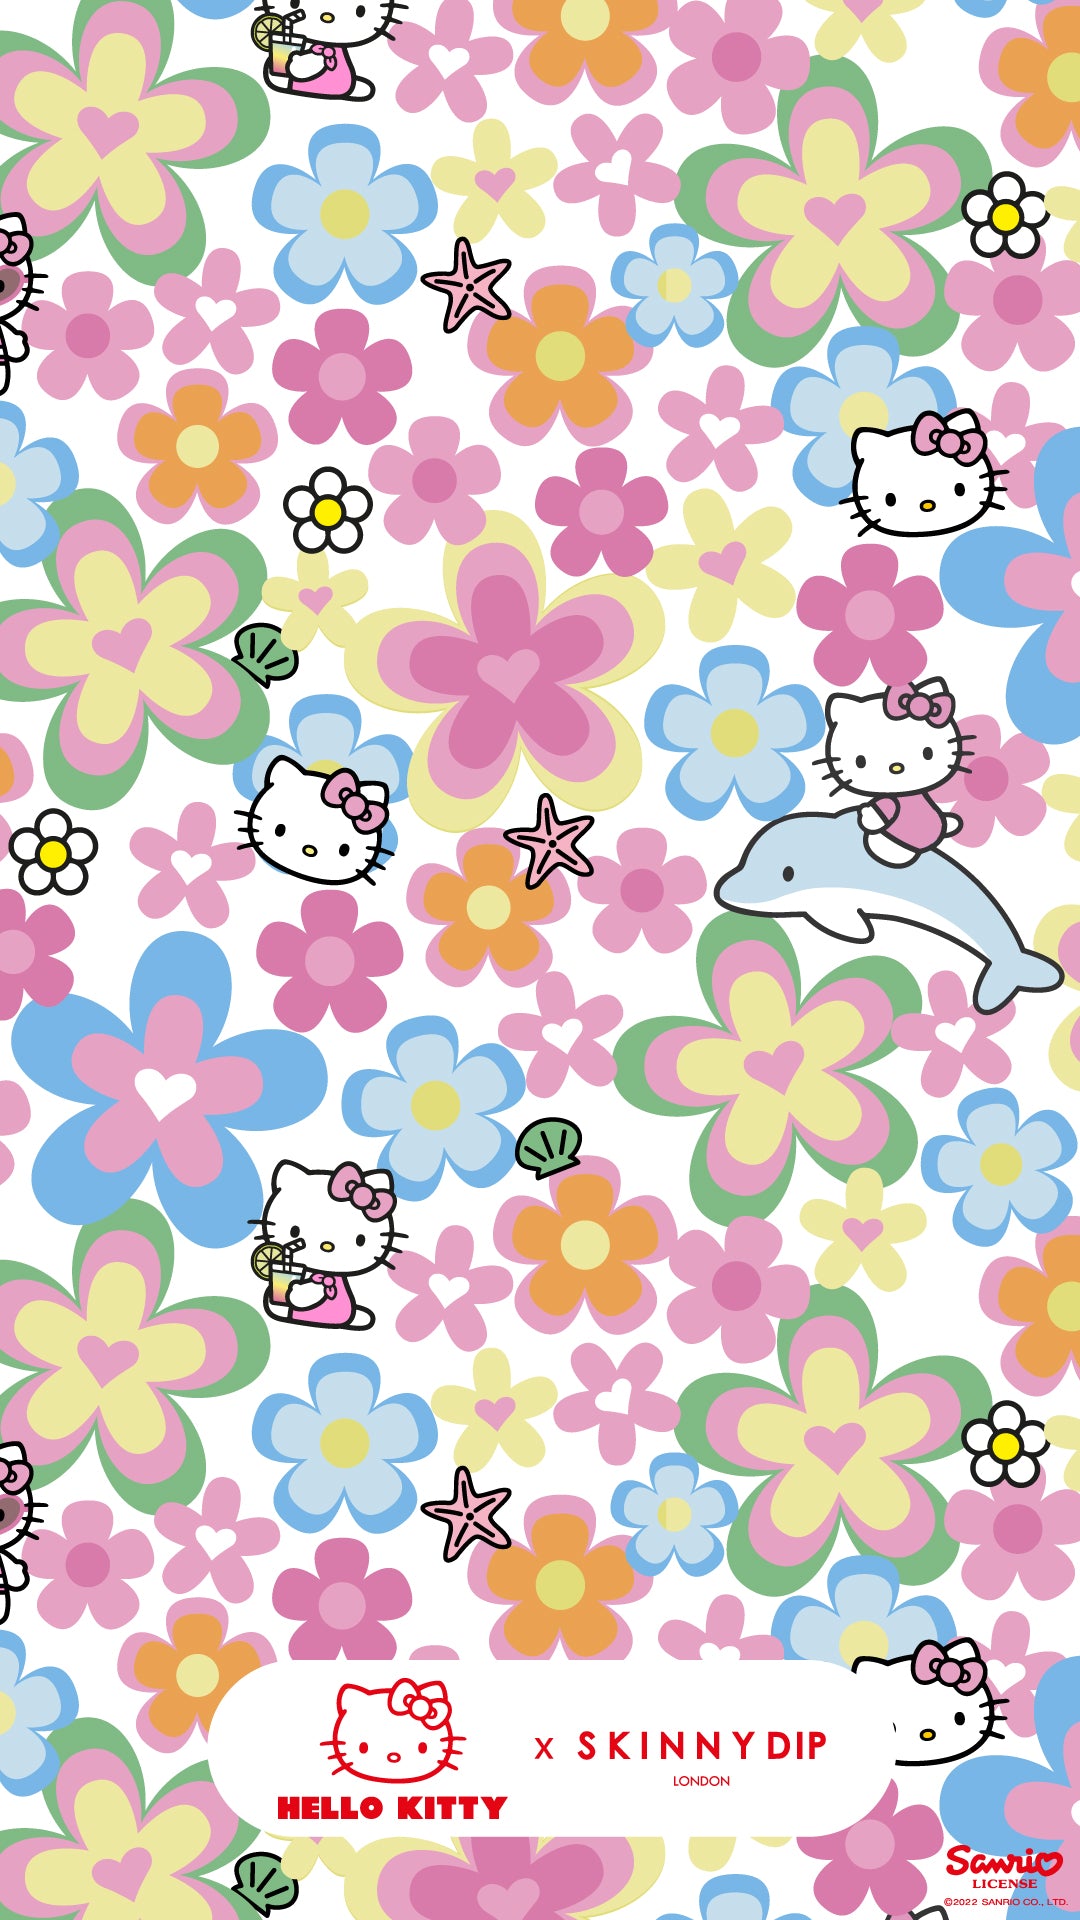 Hello Kitty x Skinnydip Drop 2 Phone Wallpaper 07